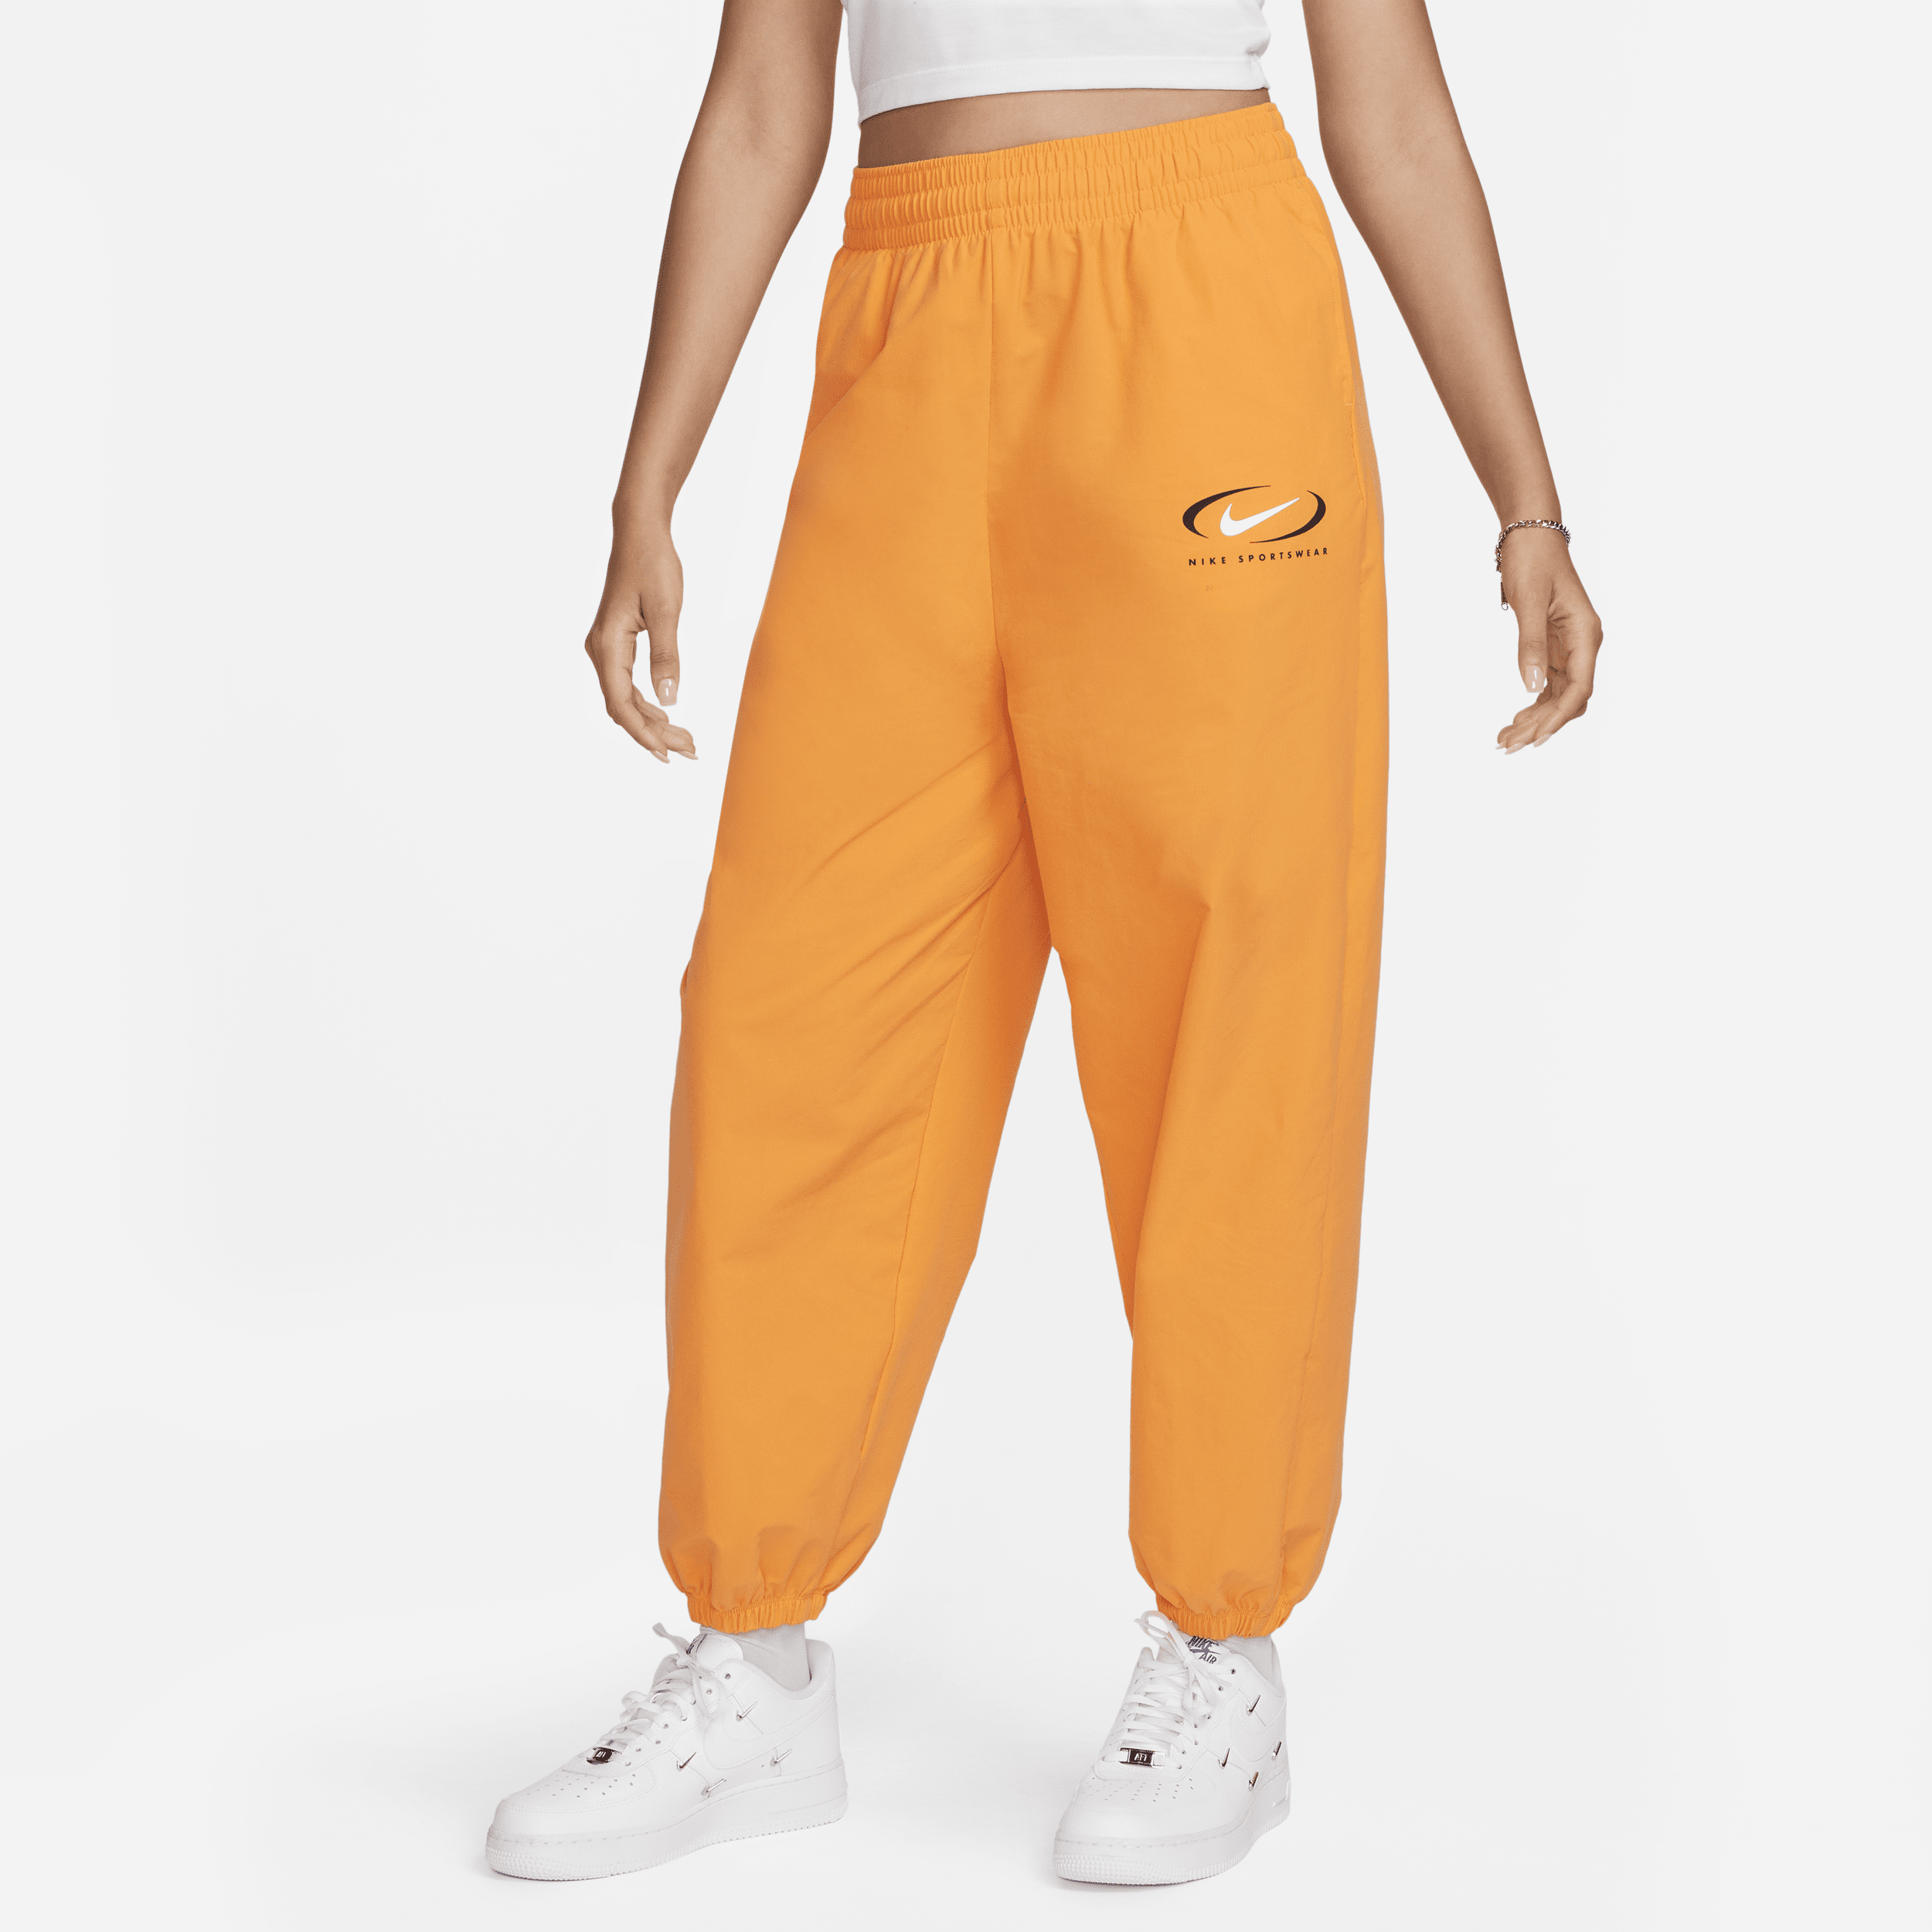 Nike Sportswear geweven joggingbroek voor dames - Oranje